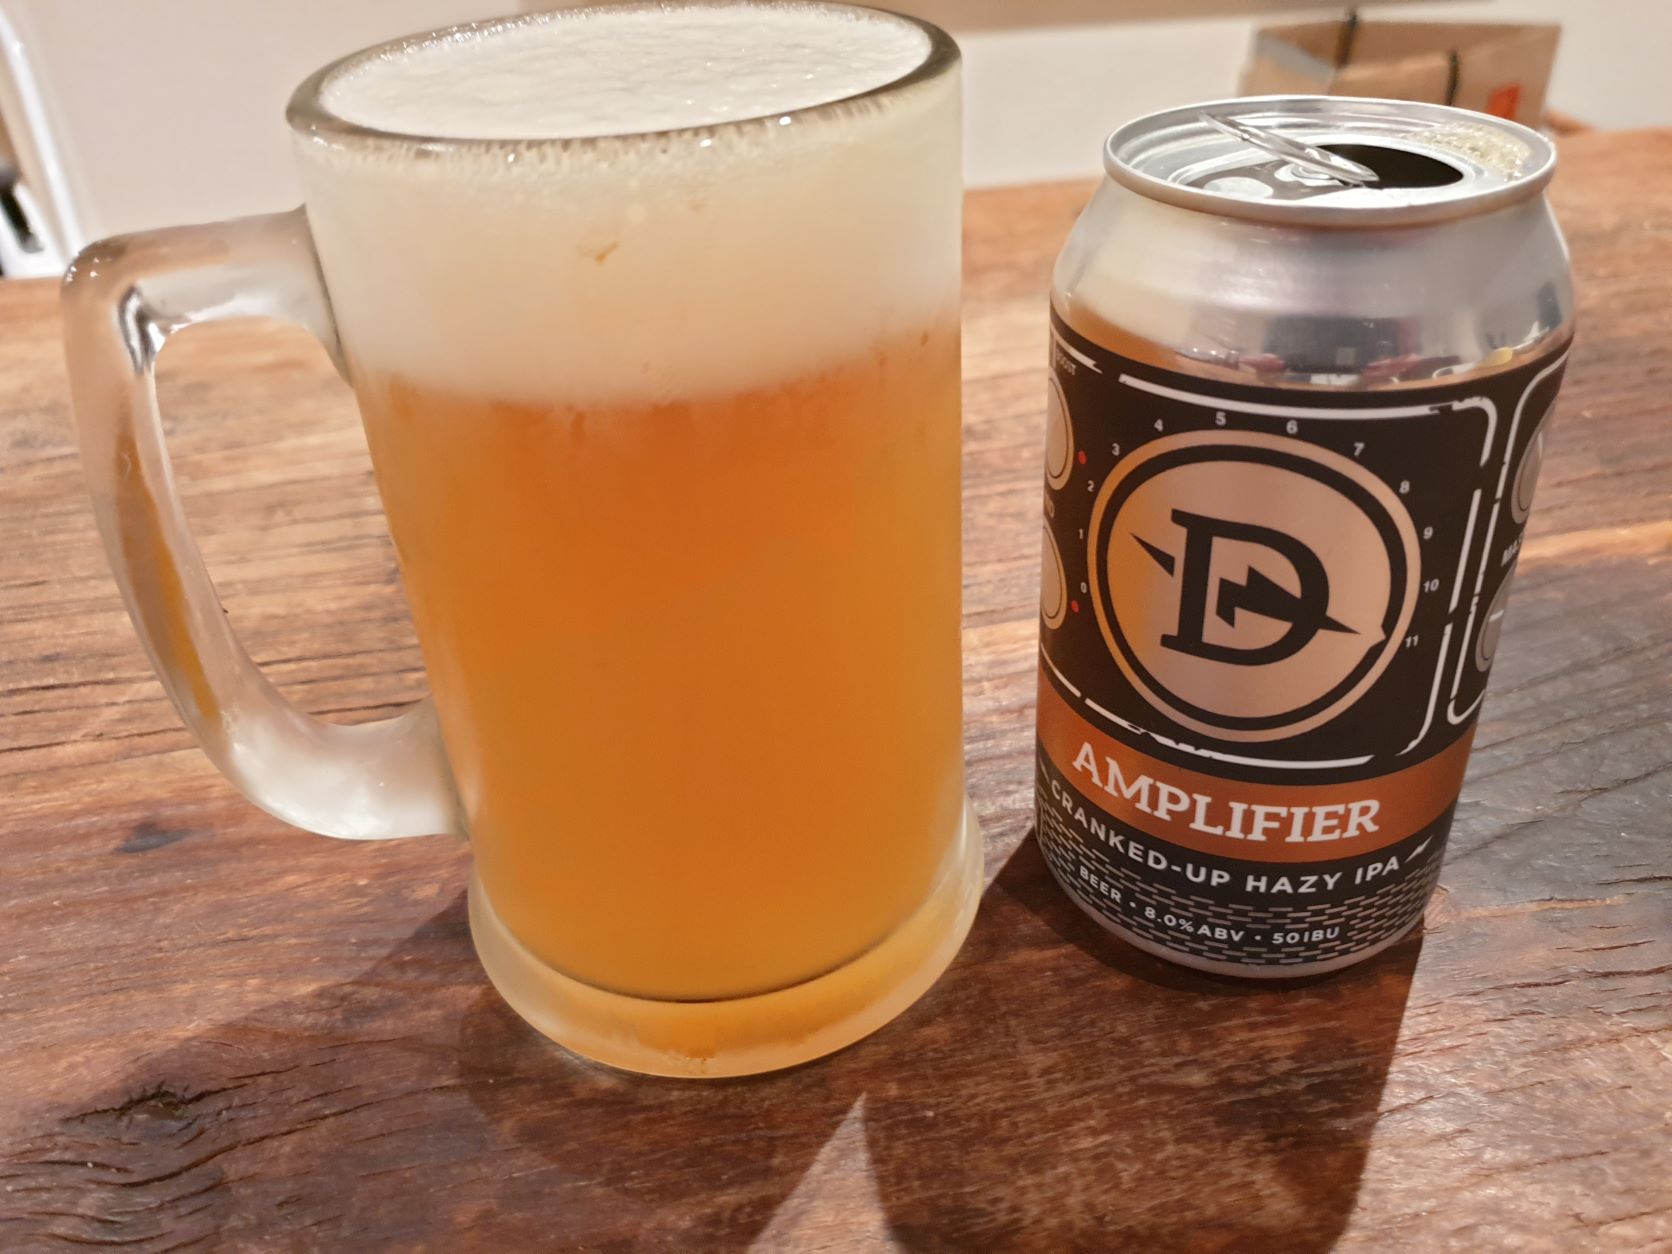 Amplifier Hazy IPA by Dainton Brewery